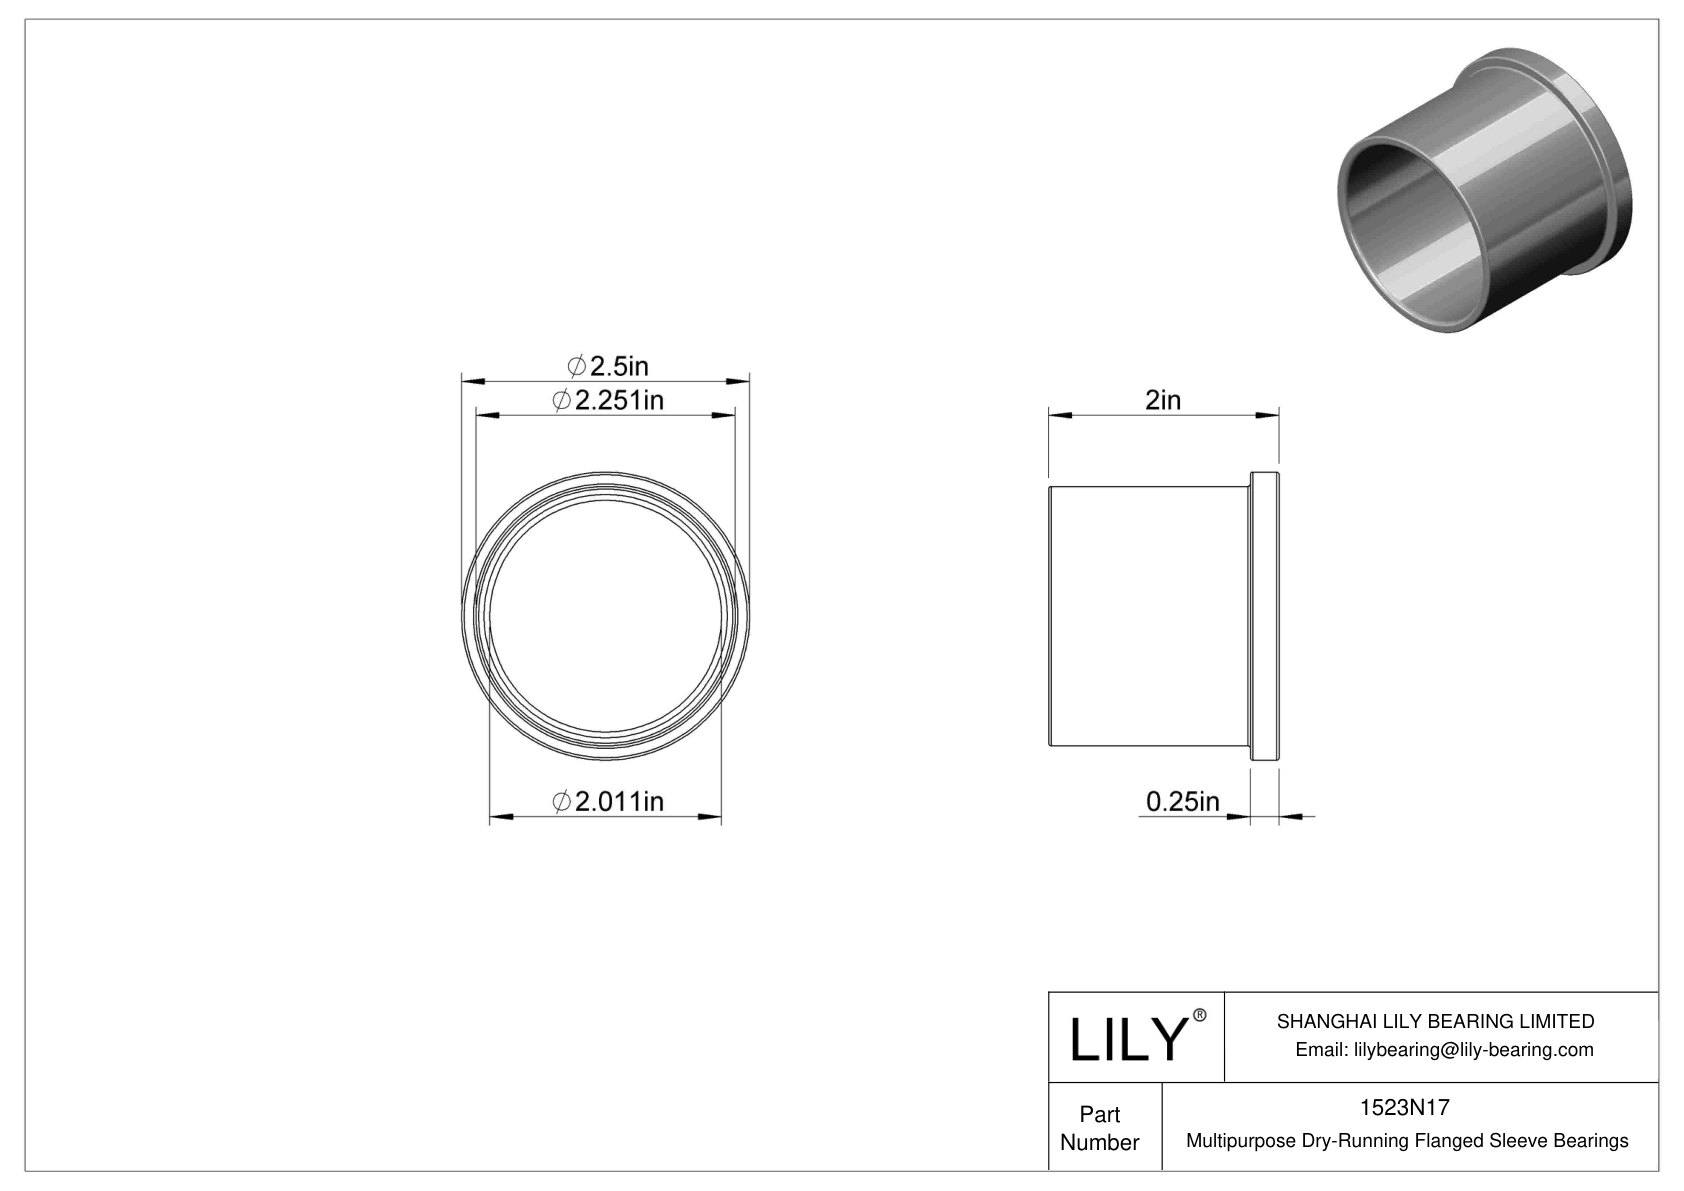 BFCDNBH Multipurpose Dry-Running Flanged Sleeve Bearings cad drawing